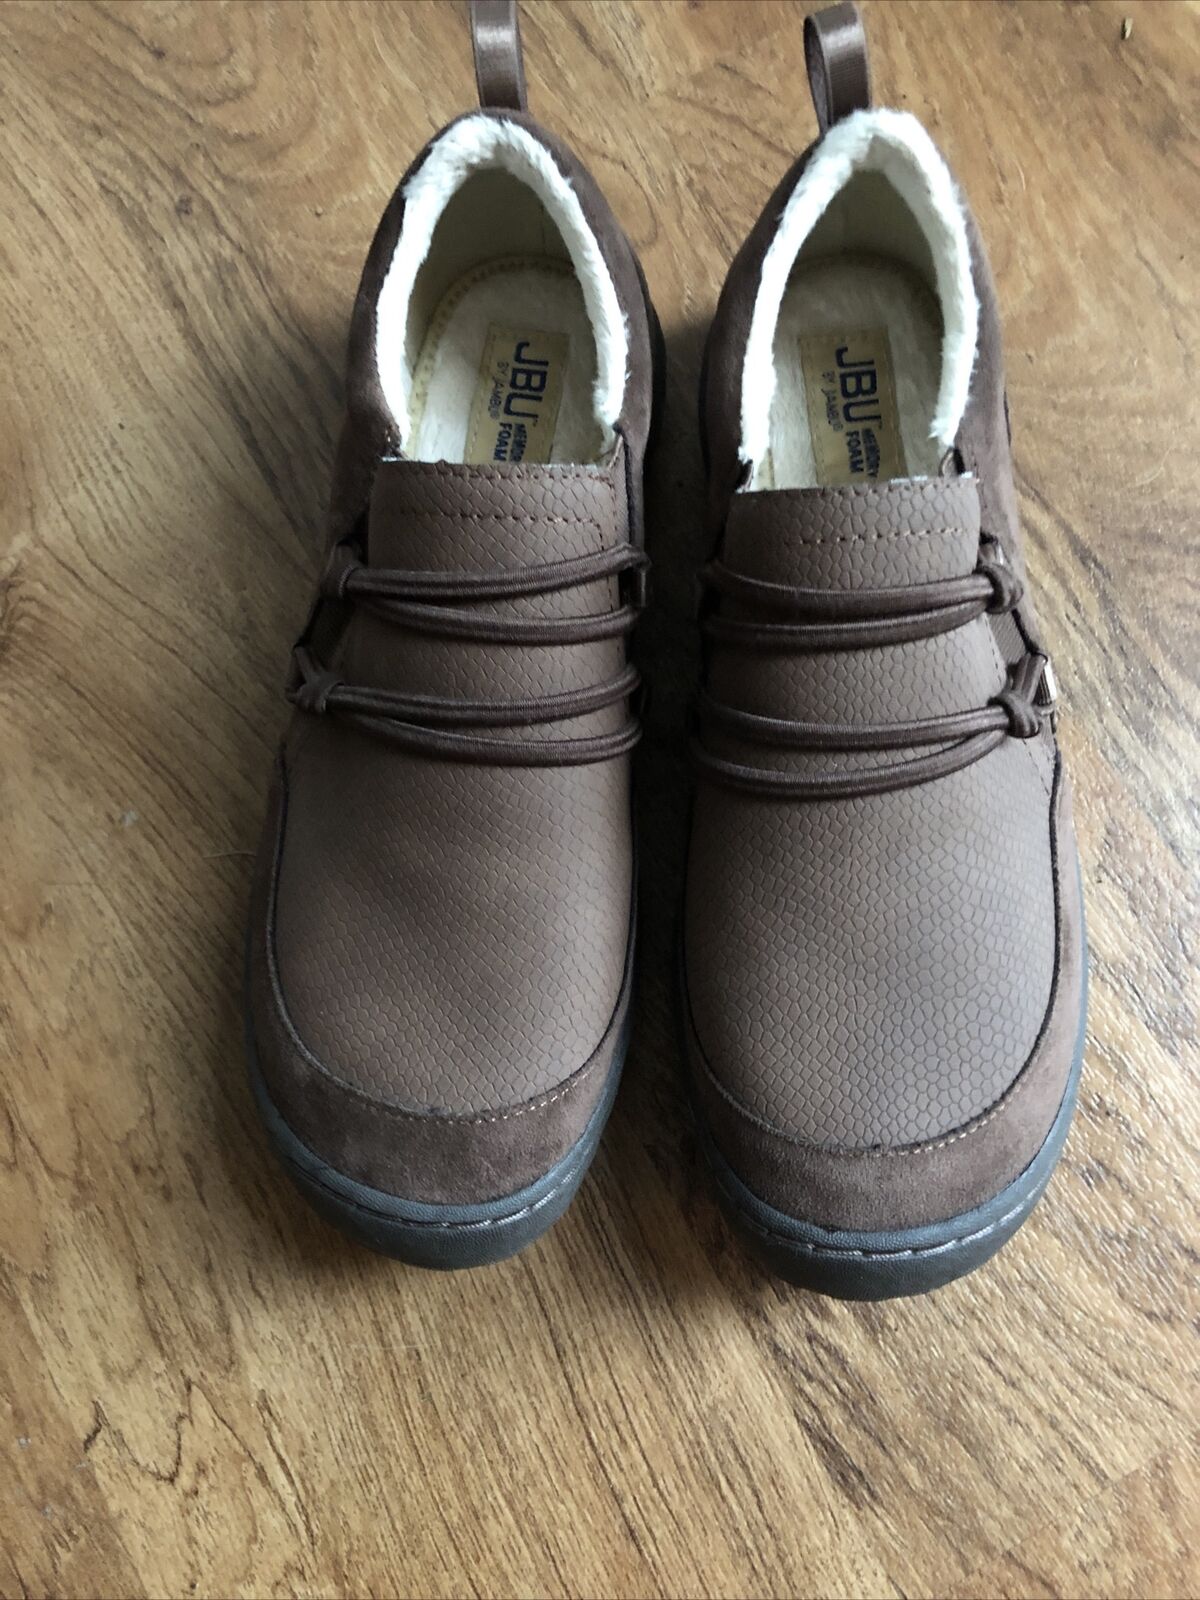 JBU by Jambu Women's Ashton Comfort Casual Shoes - Brown - Size 7.5